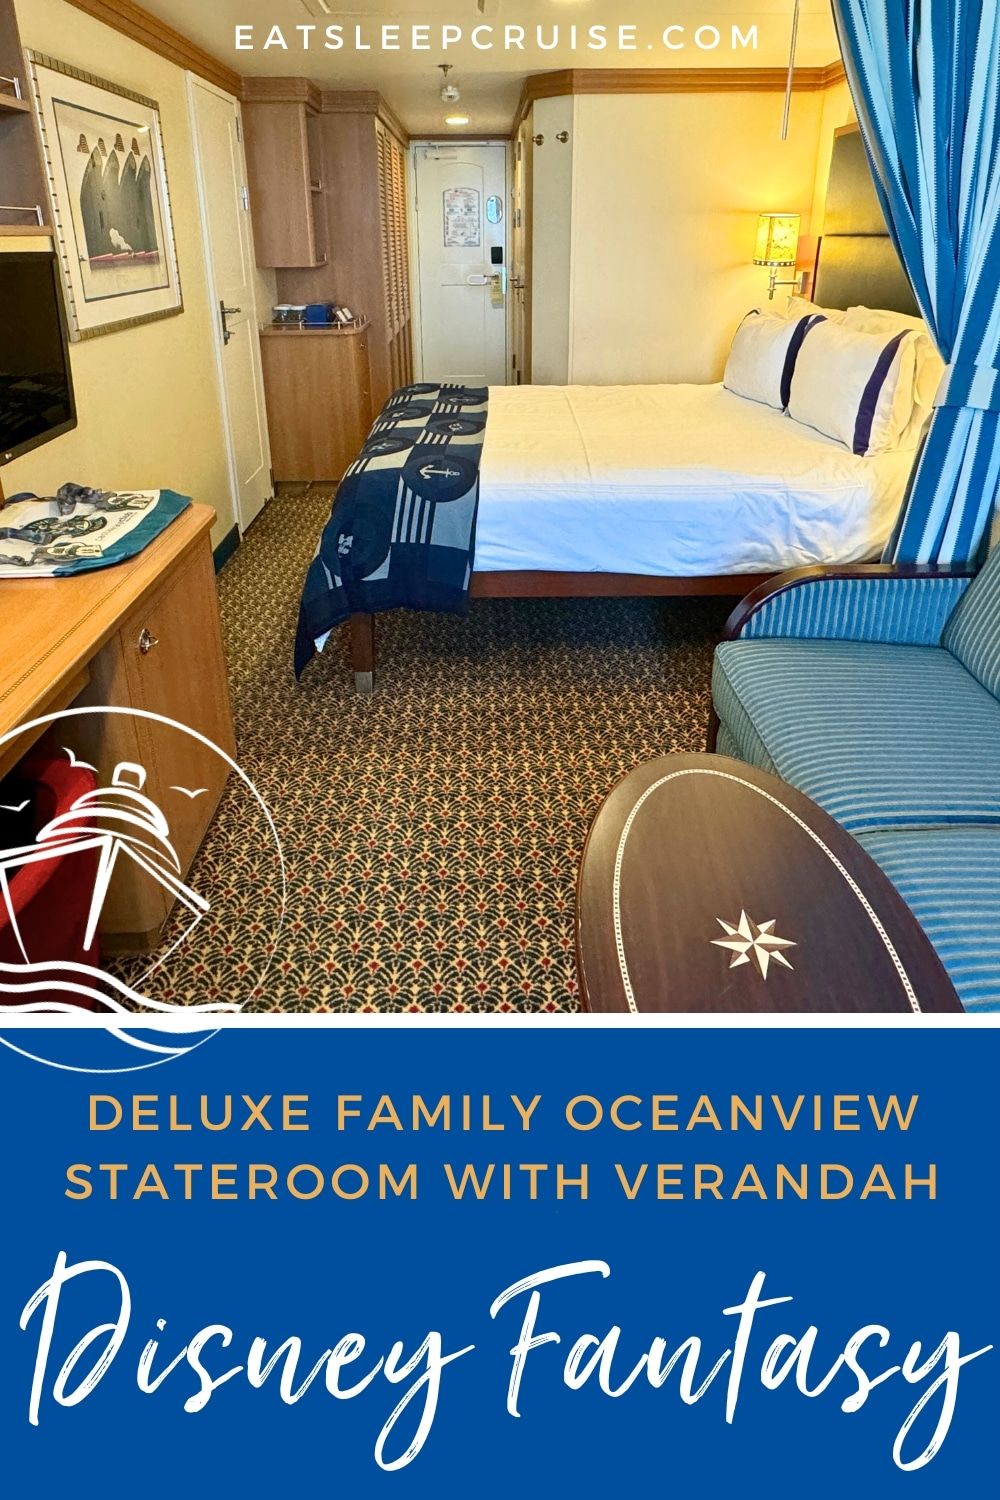 Deluxe Family Oceanview Stateroom with Verandah